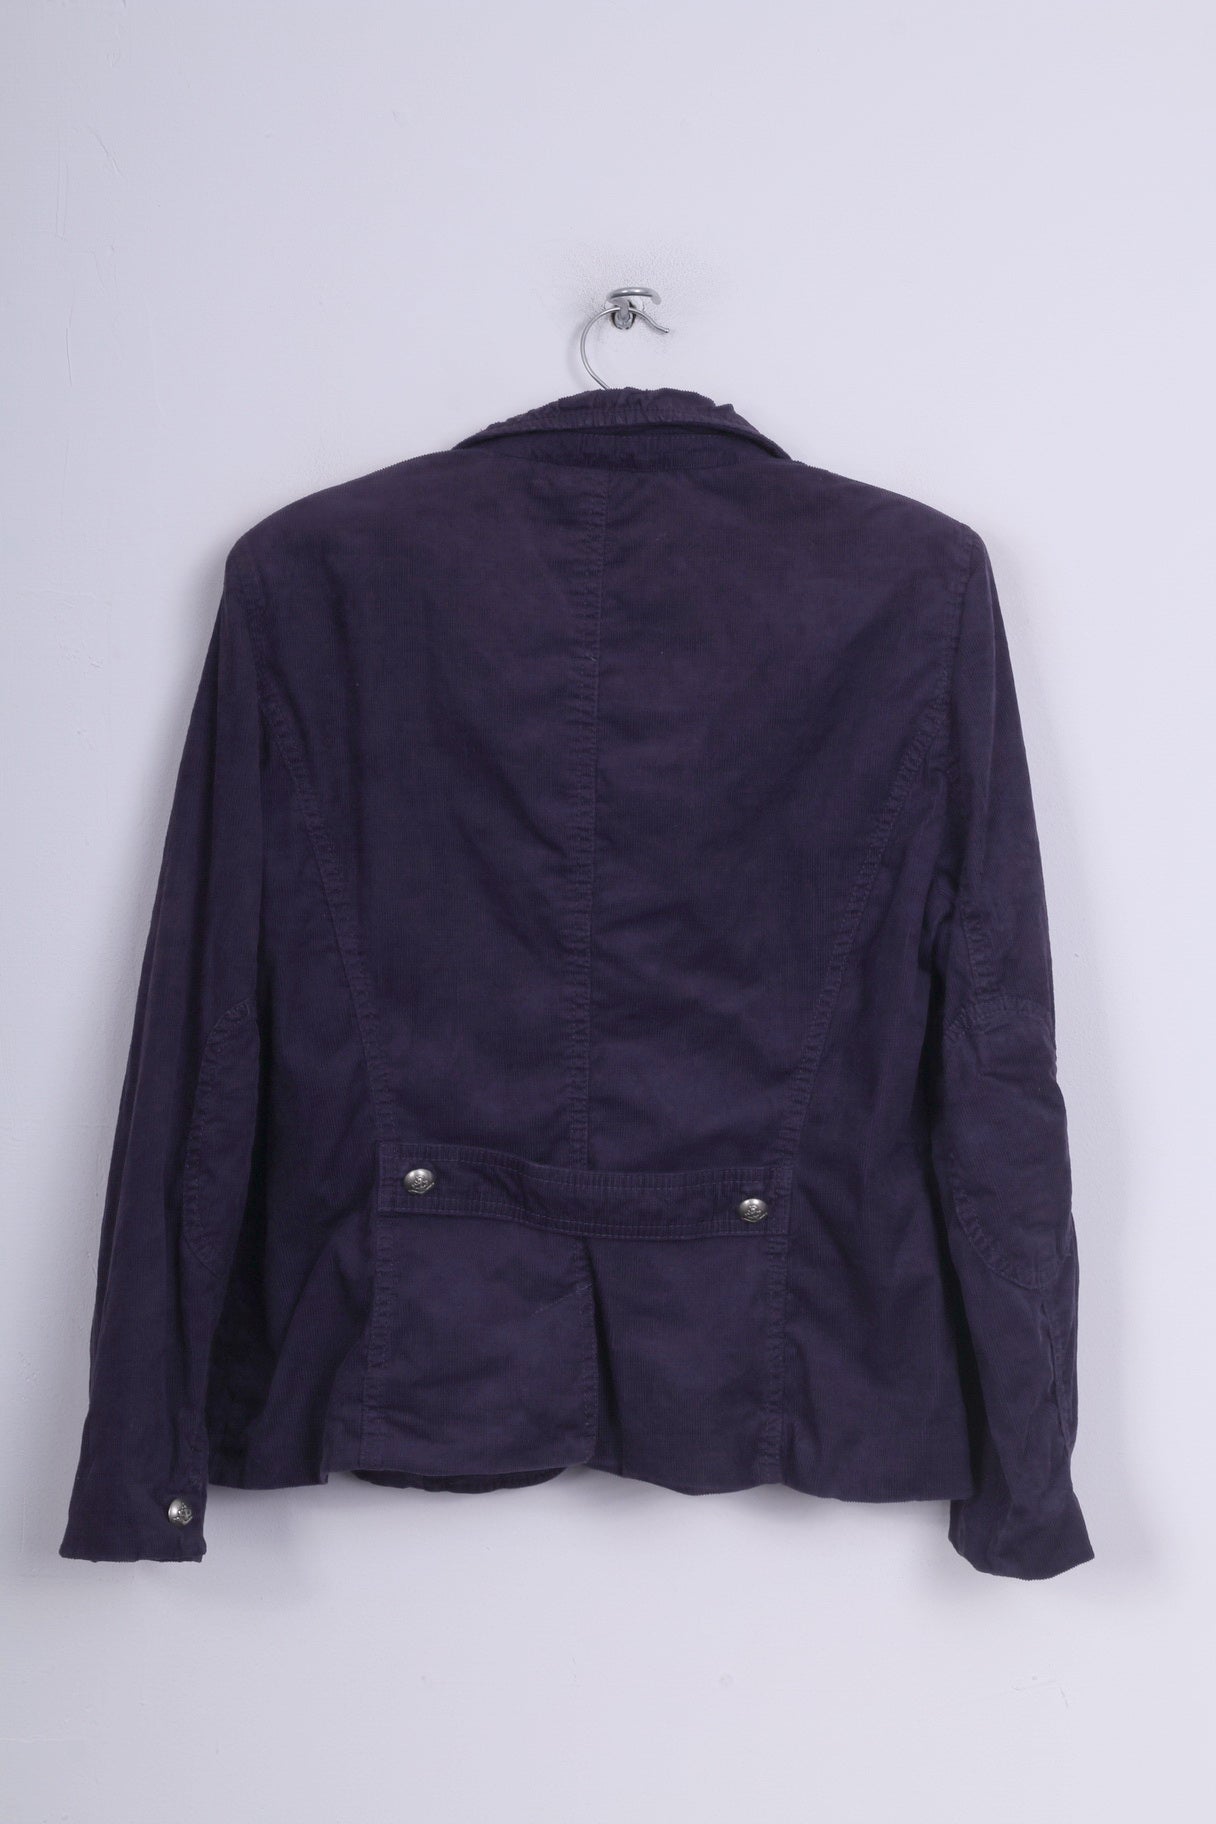 Hirsch. Womens 12 M Blazer Jacket Corduroy Purple Single Breasted Cotton Sholuder Pads